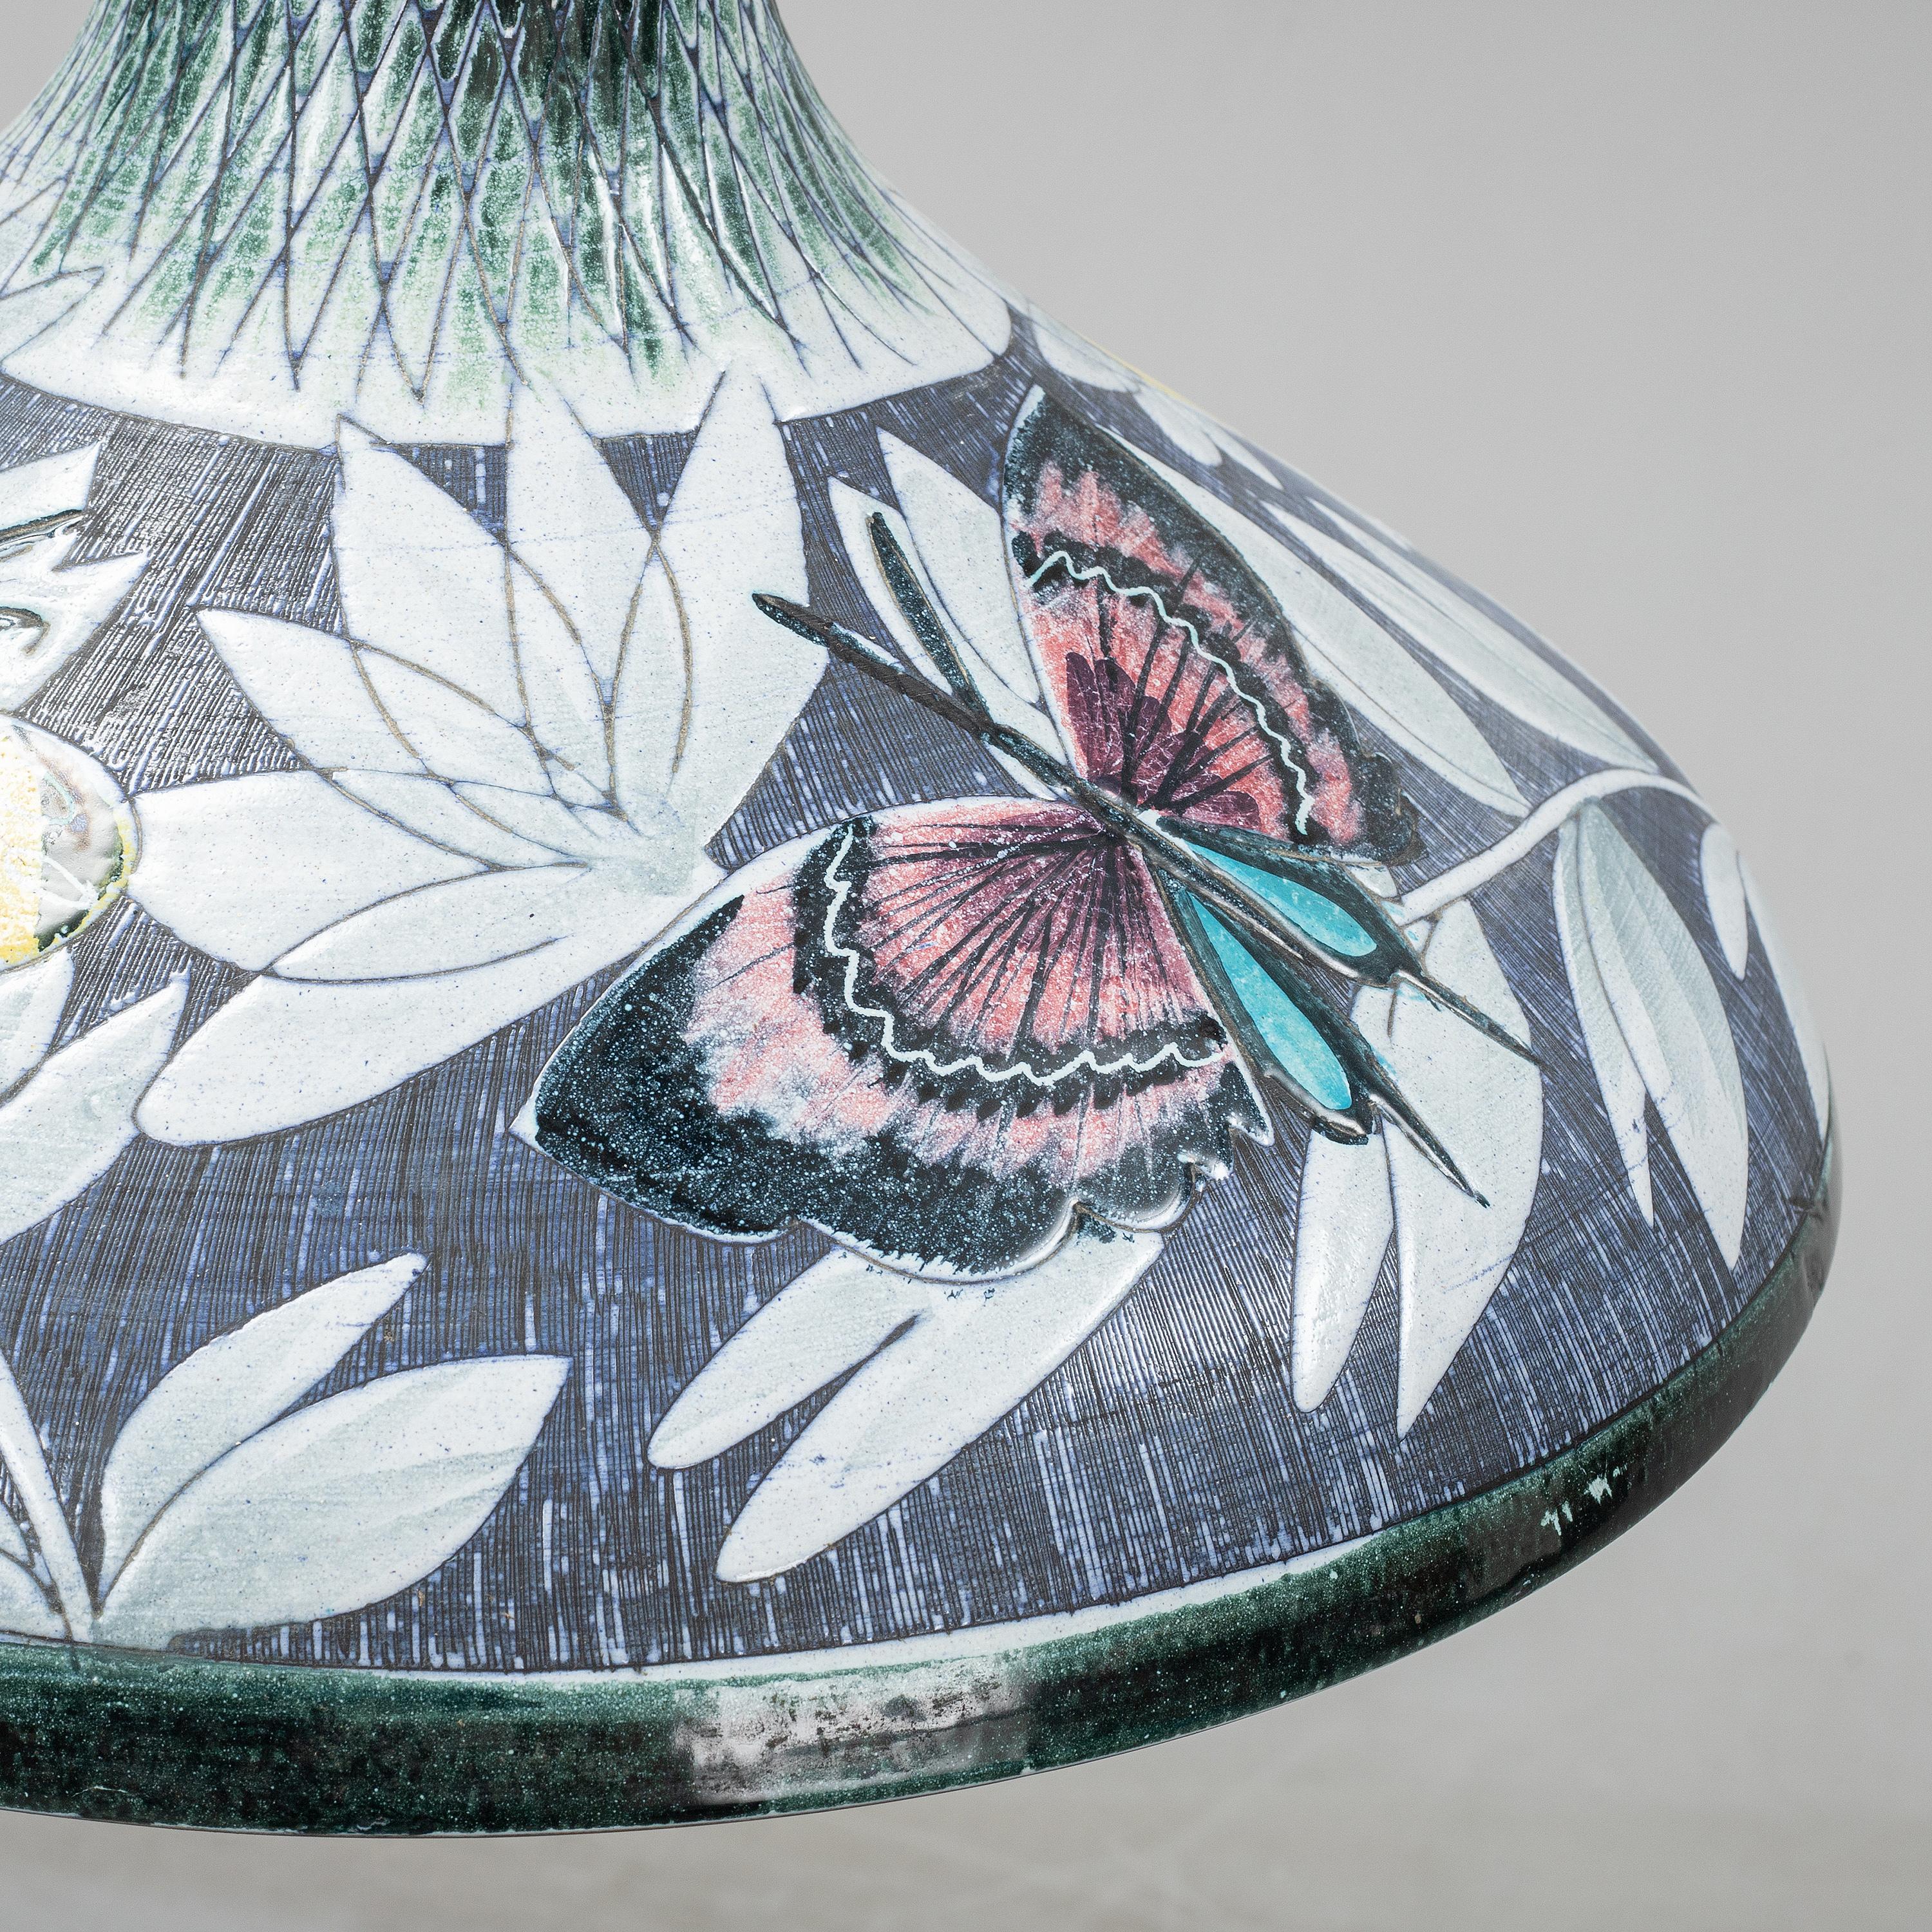  Pendant in Ceramic hand painted by Marian Zawadki for Tilgmans keramic. 1950
Ceramic and teak wood
Good condition

